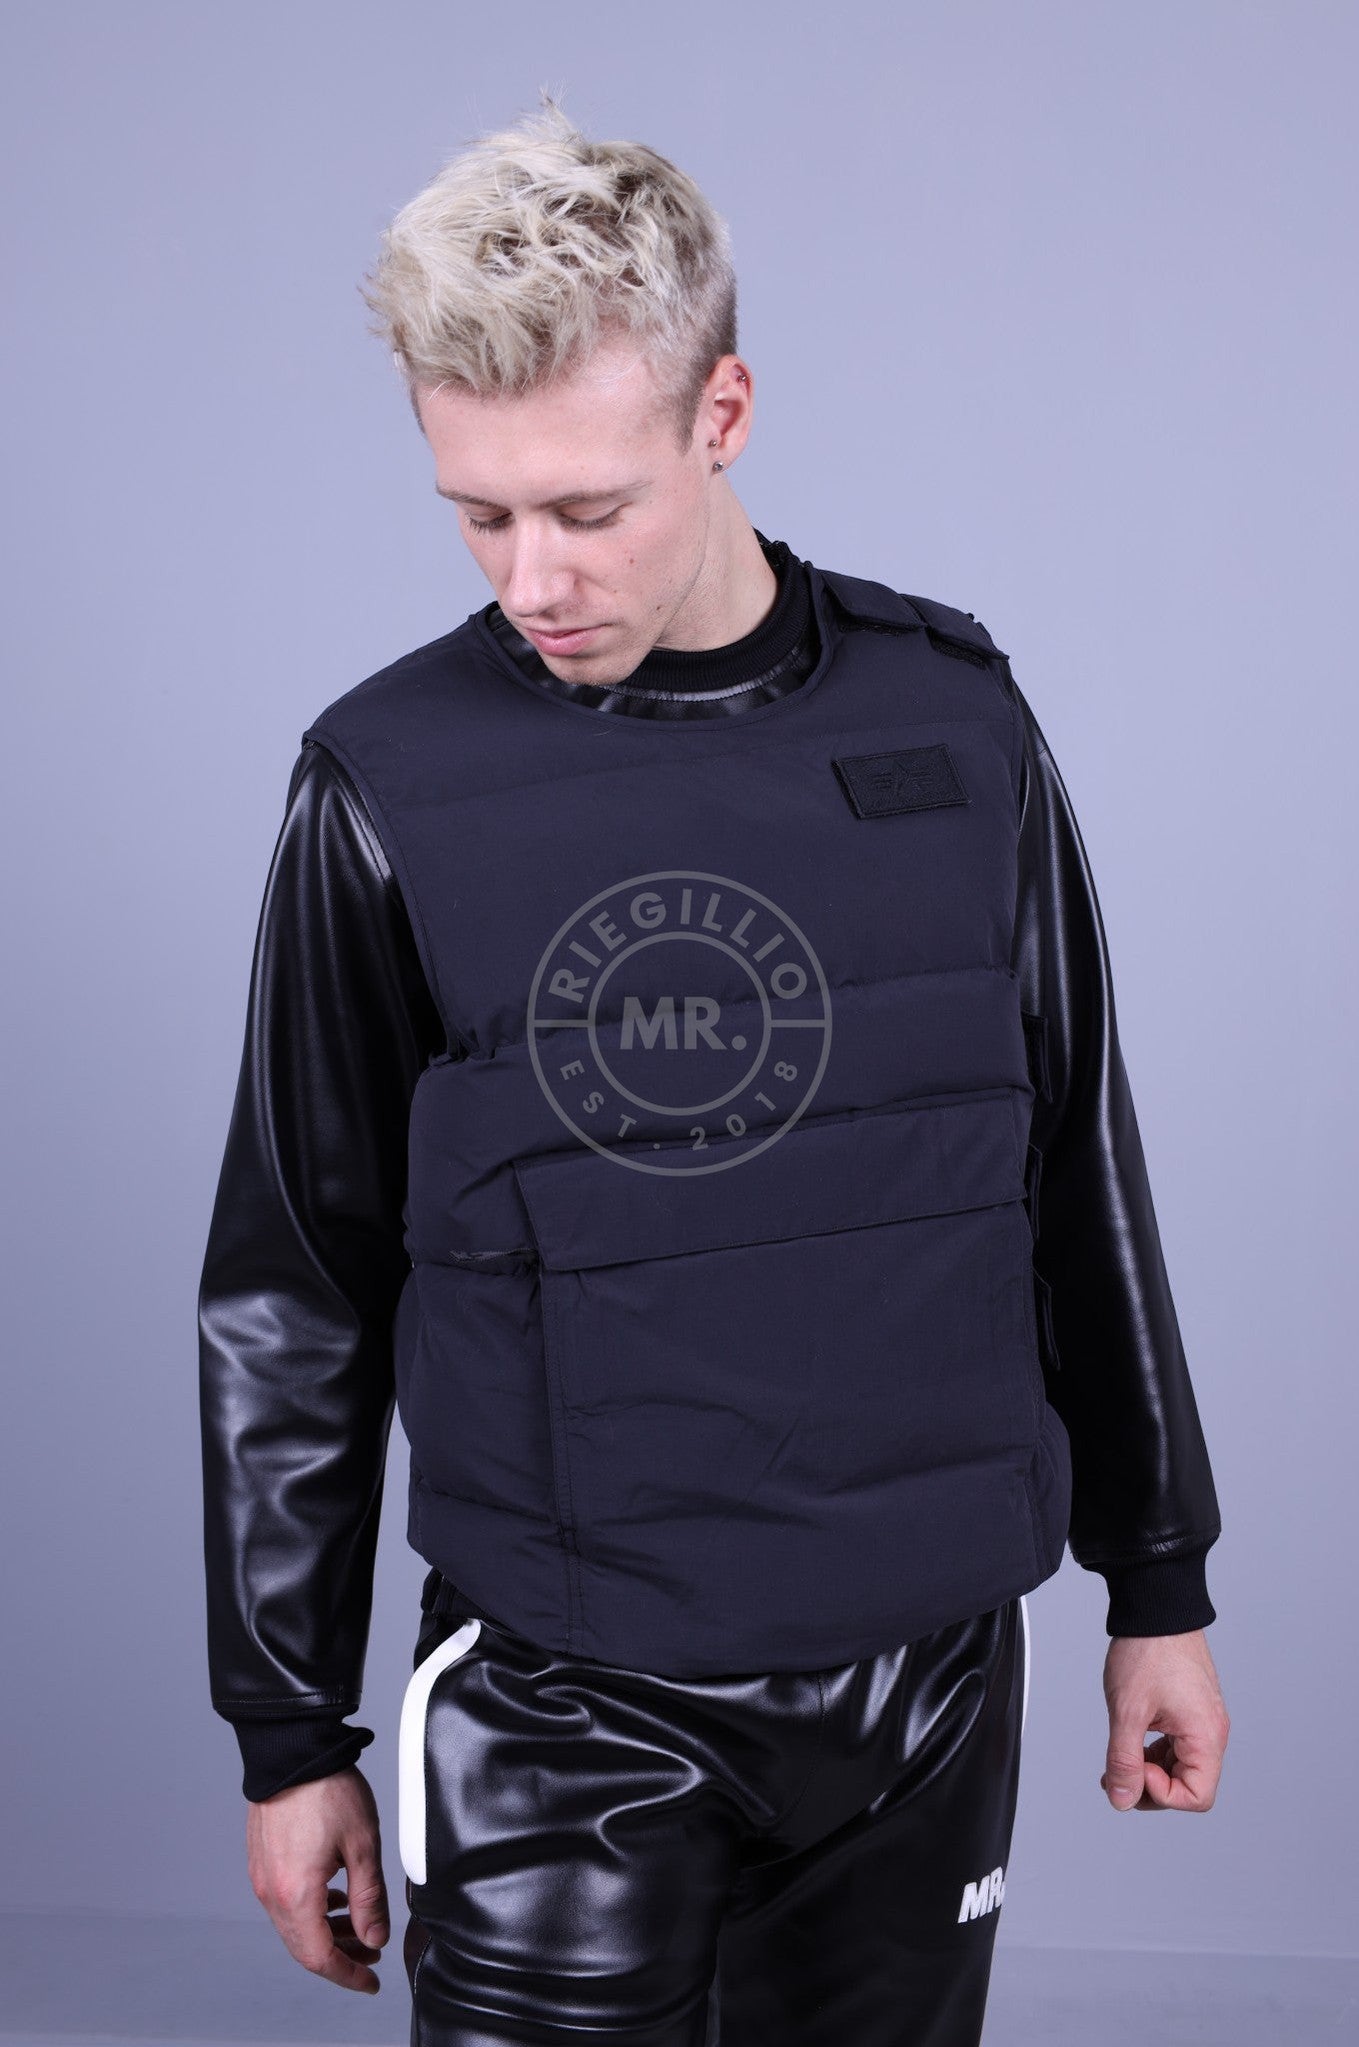 Alpha Industries Protector Puffer Vest at Riegillio - MR. Black